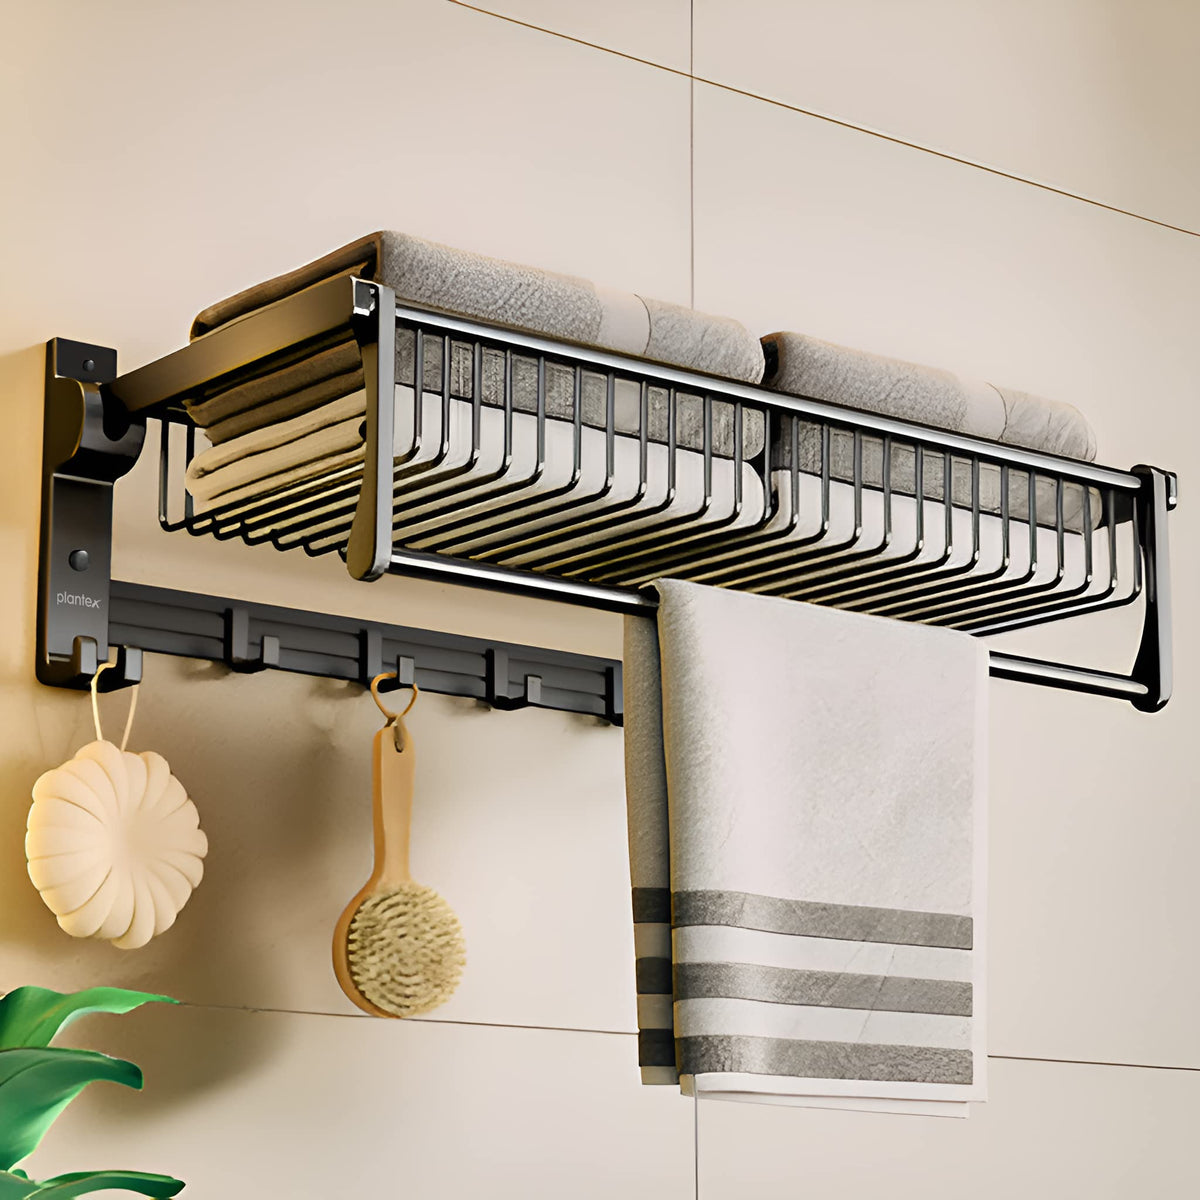 Plantex Aluminium Towel Rack/Towel Rod/Towel Hanger with Hooks/Bathroom Organizer/Bathroom Accessories (961,Black) - Pack of 1